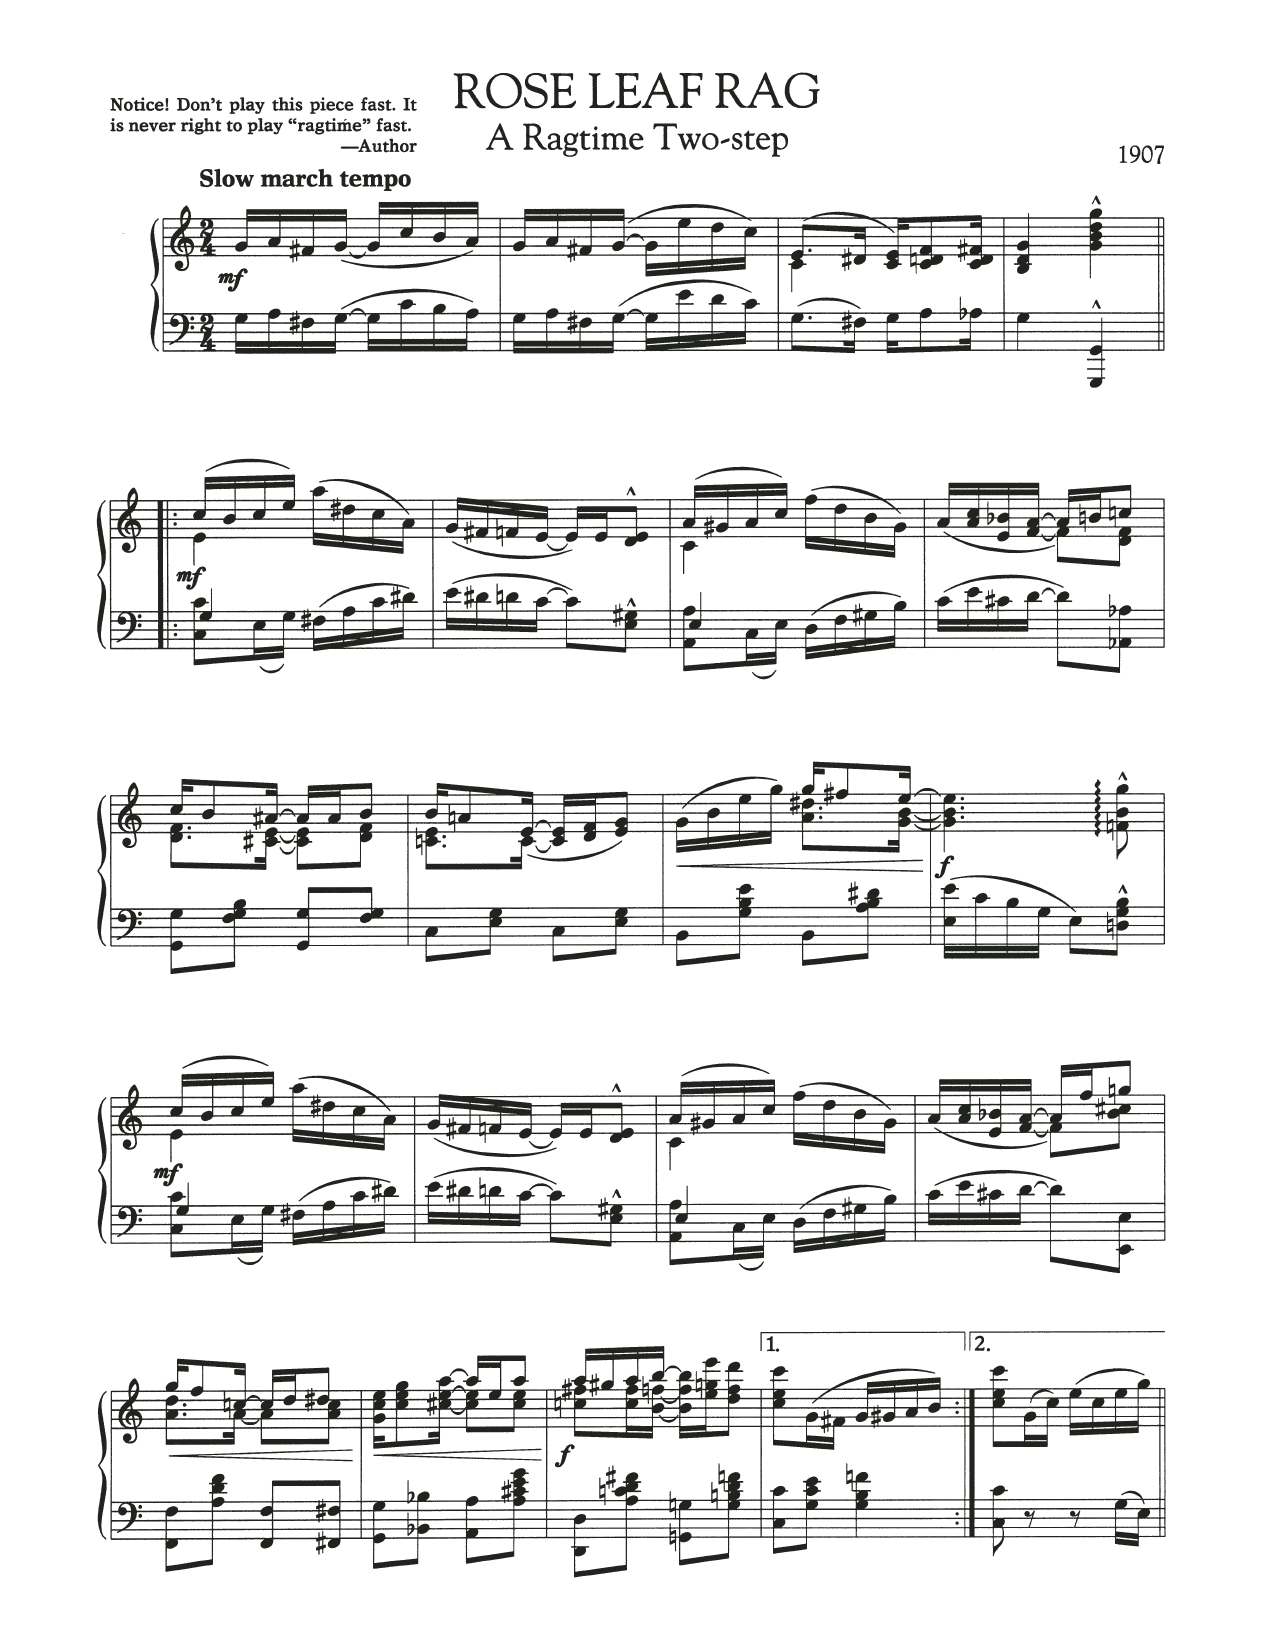 Scott Joplin Rose Leaf Rag Sheet Music Notes & Chords for Piano Solo - Download or Print PDF